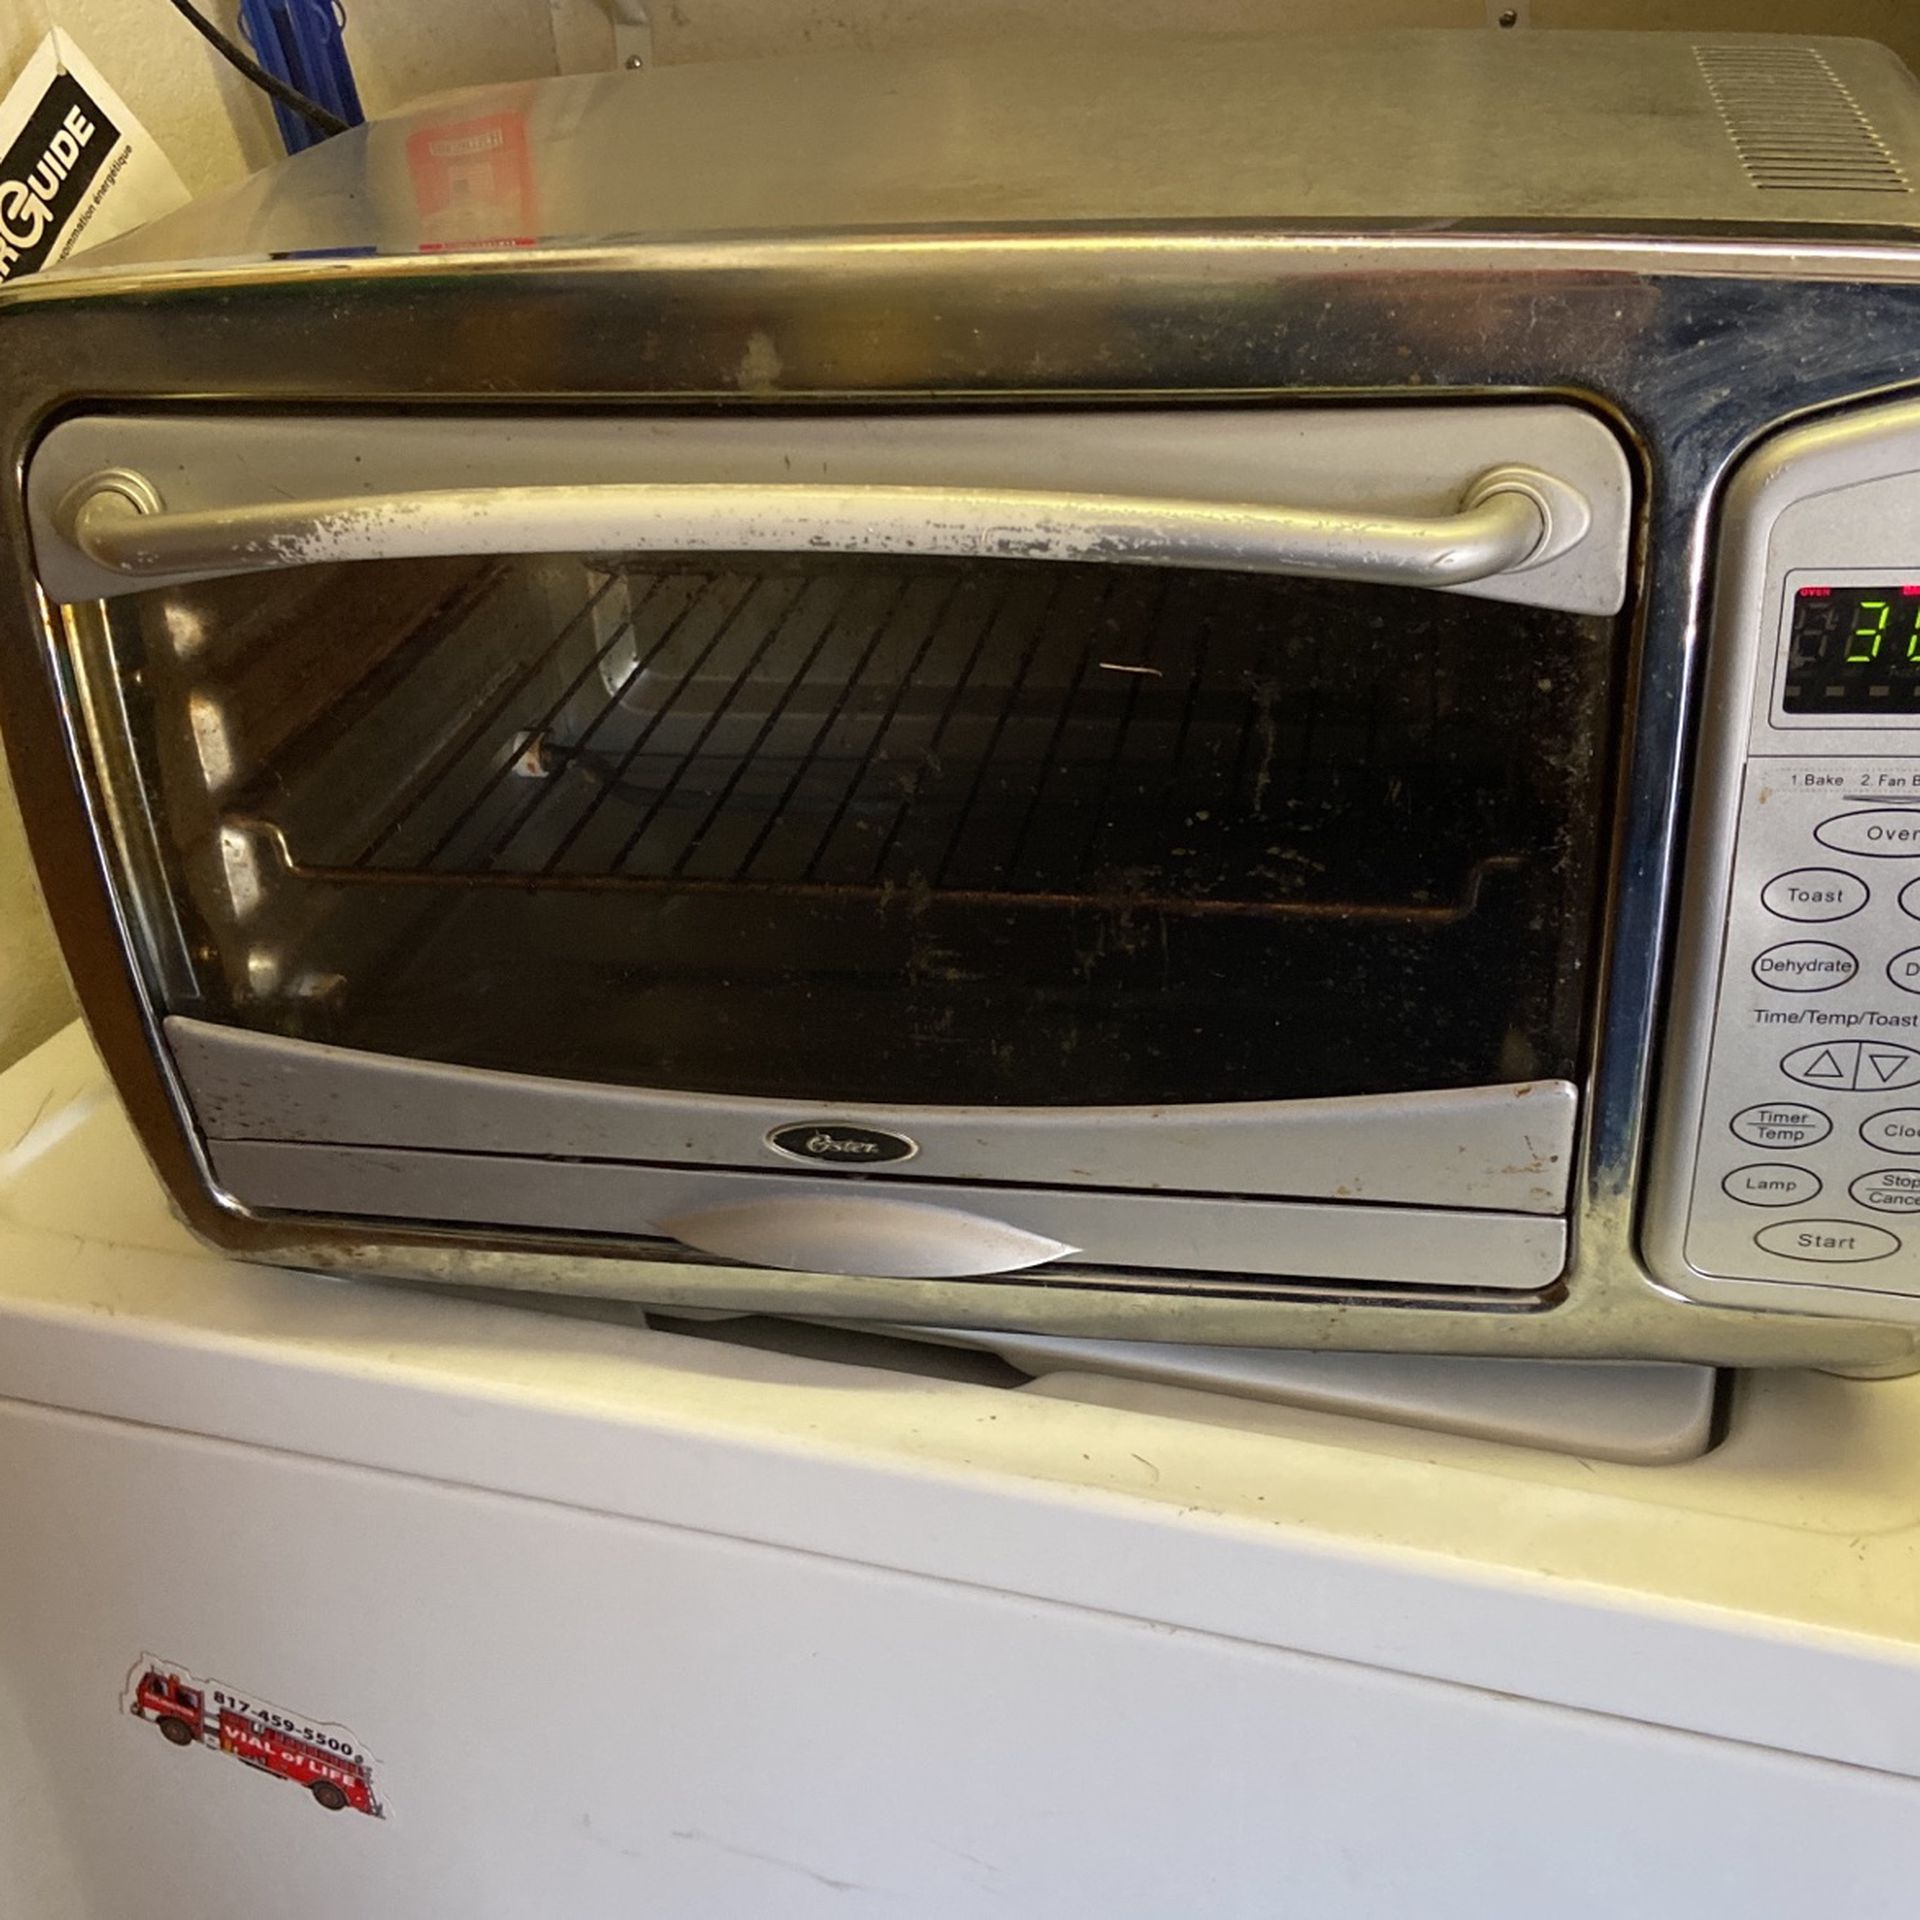 Toaster Oven Digital